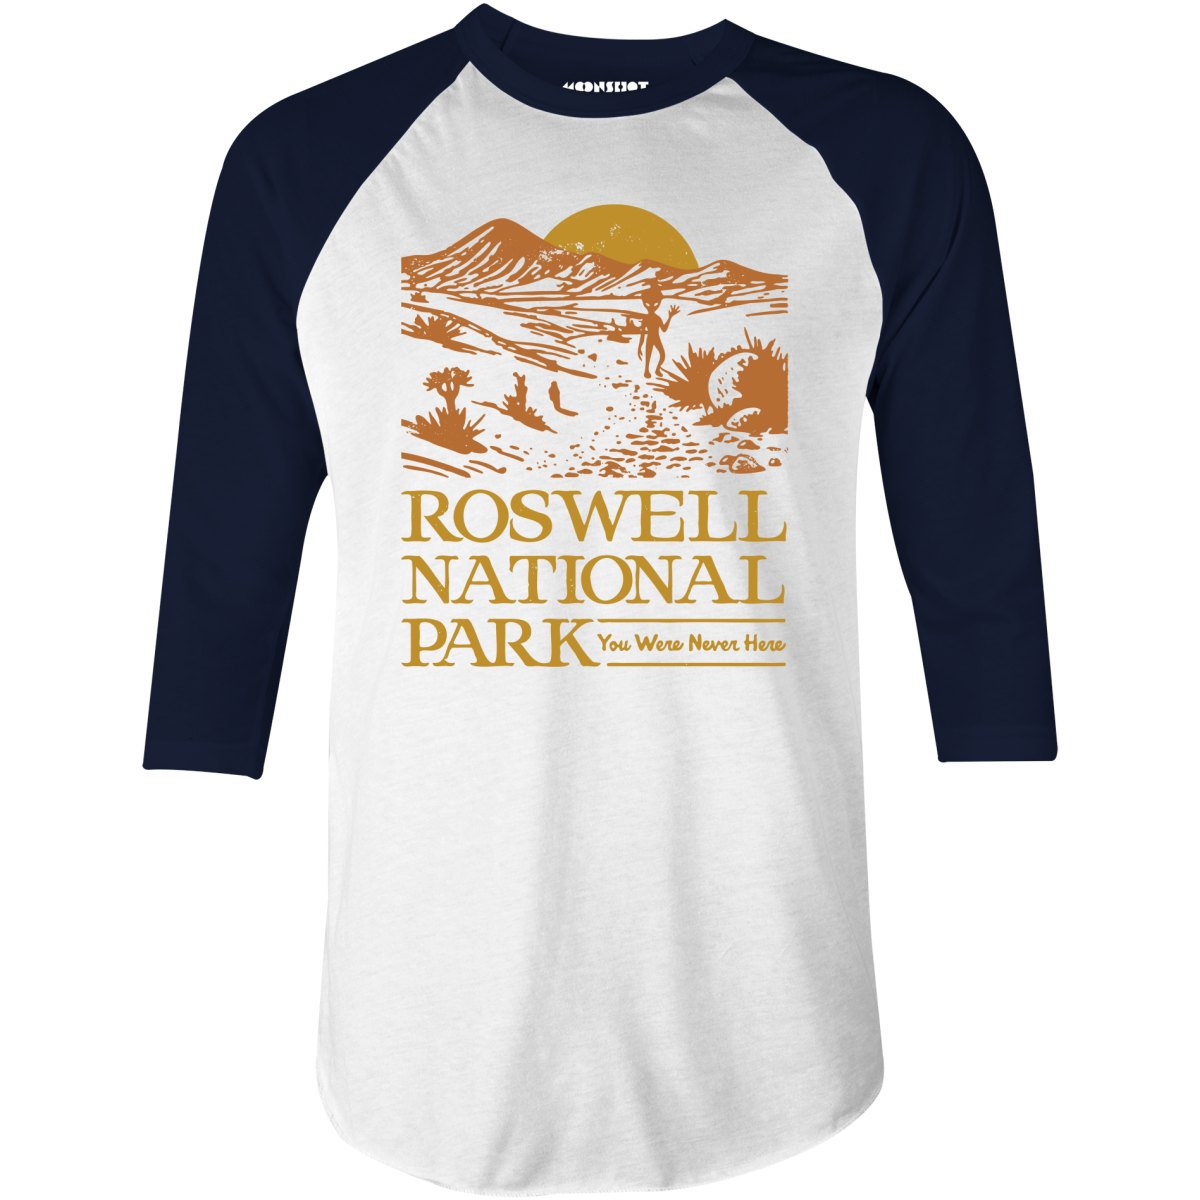 Roswell National Park - 3/4 Sleeve Raglan T-Shirt